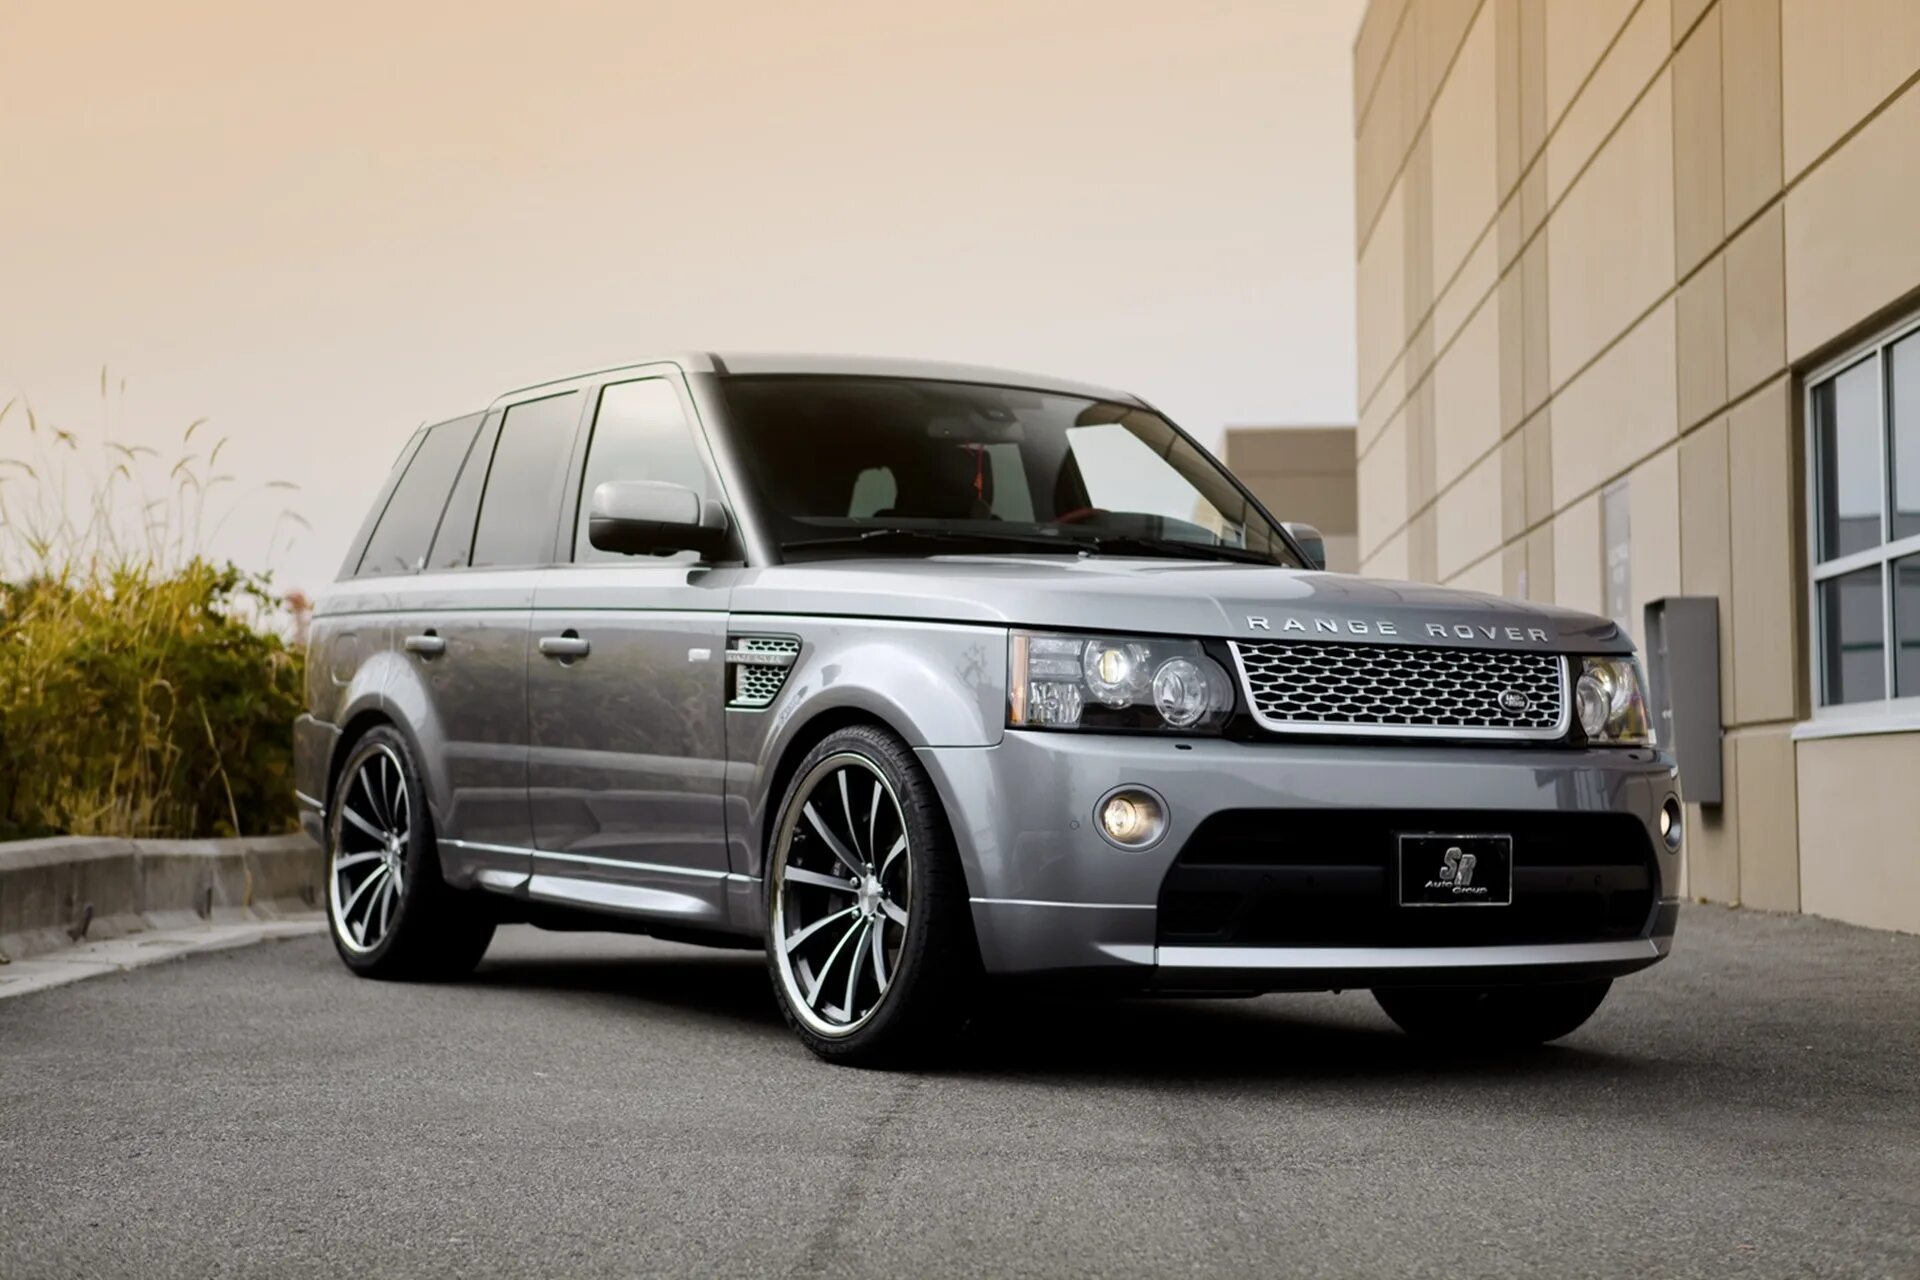 Land rover range rover sports. Машина Рендж Ровер спорт. Range Rover Sport 2014. Рендж Ровер спорт серый. Range Rover серый.